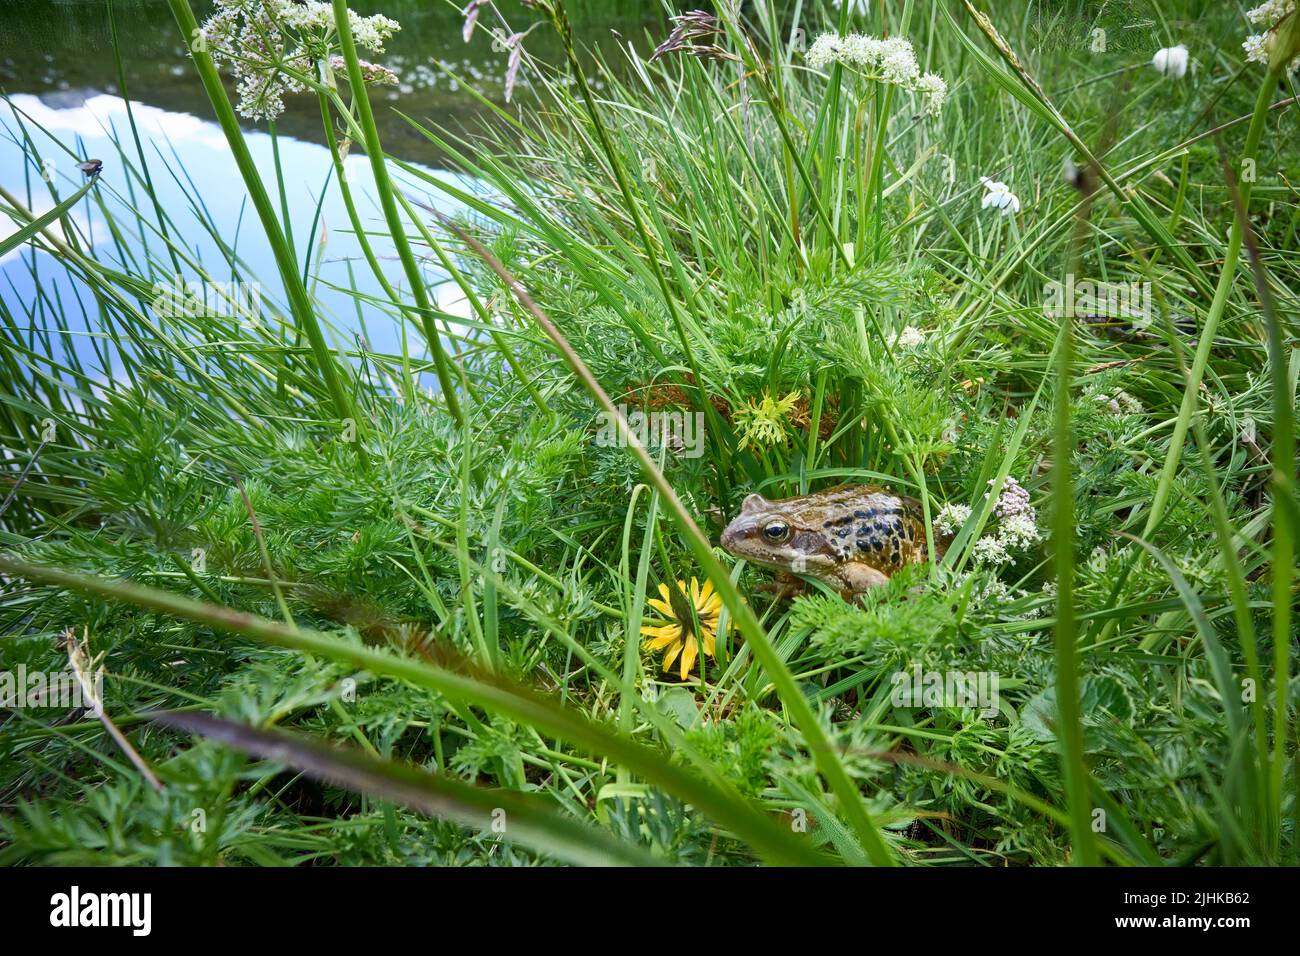 european mountain frog, Rana, in its natural habitat in the Silvretta mountains in Tyrol, Austria Stock Photo